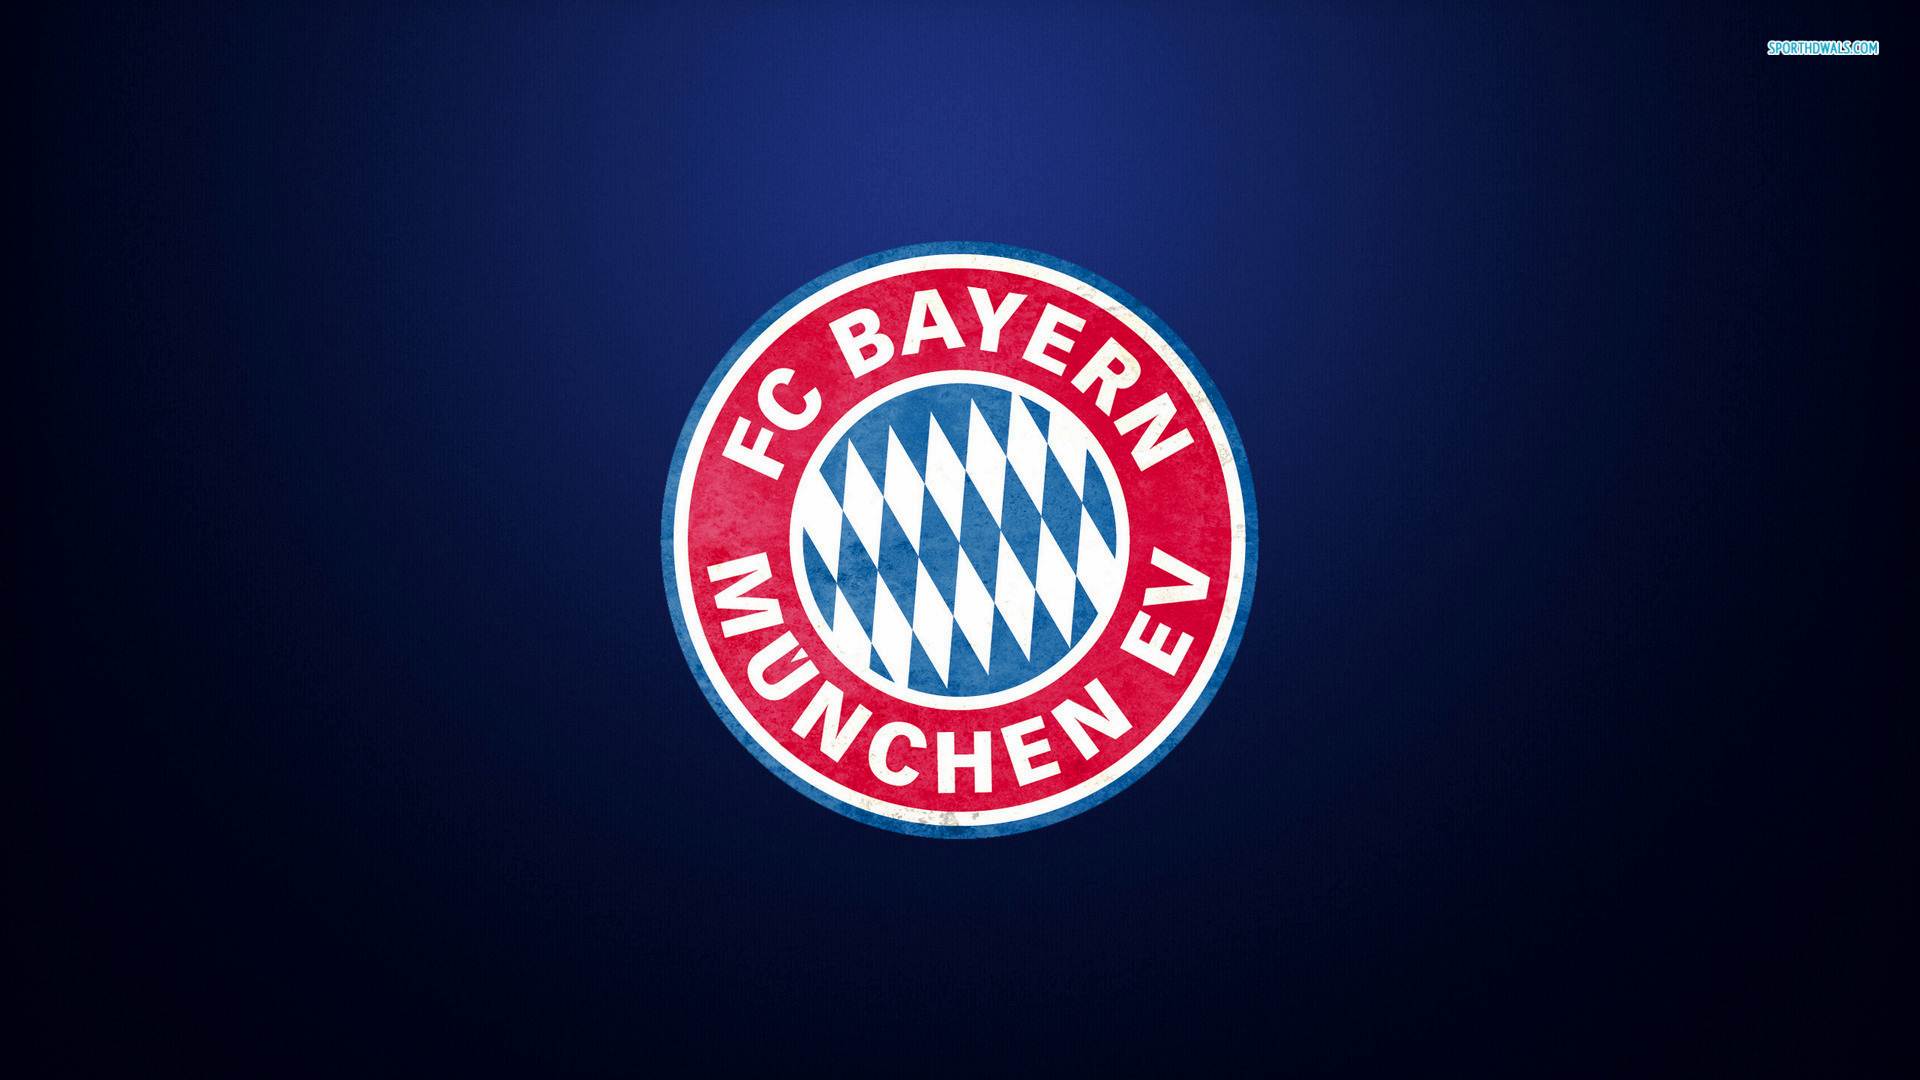 Bayern Munchen 15749 HD Wallpaper in Football